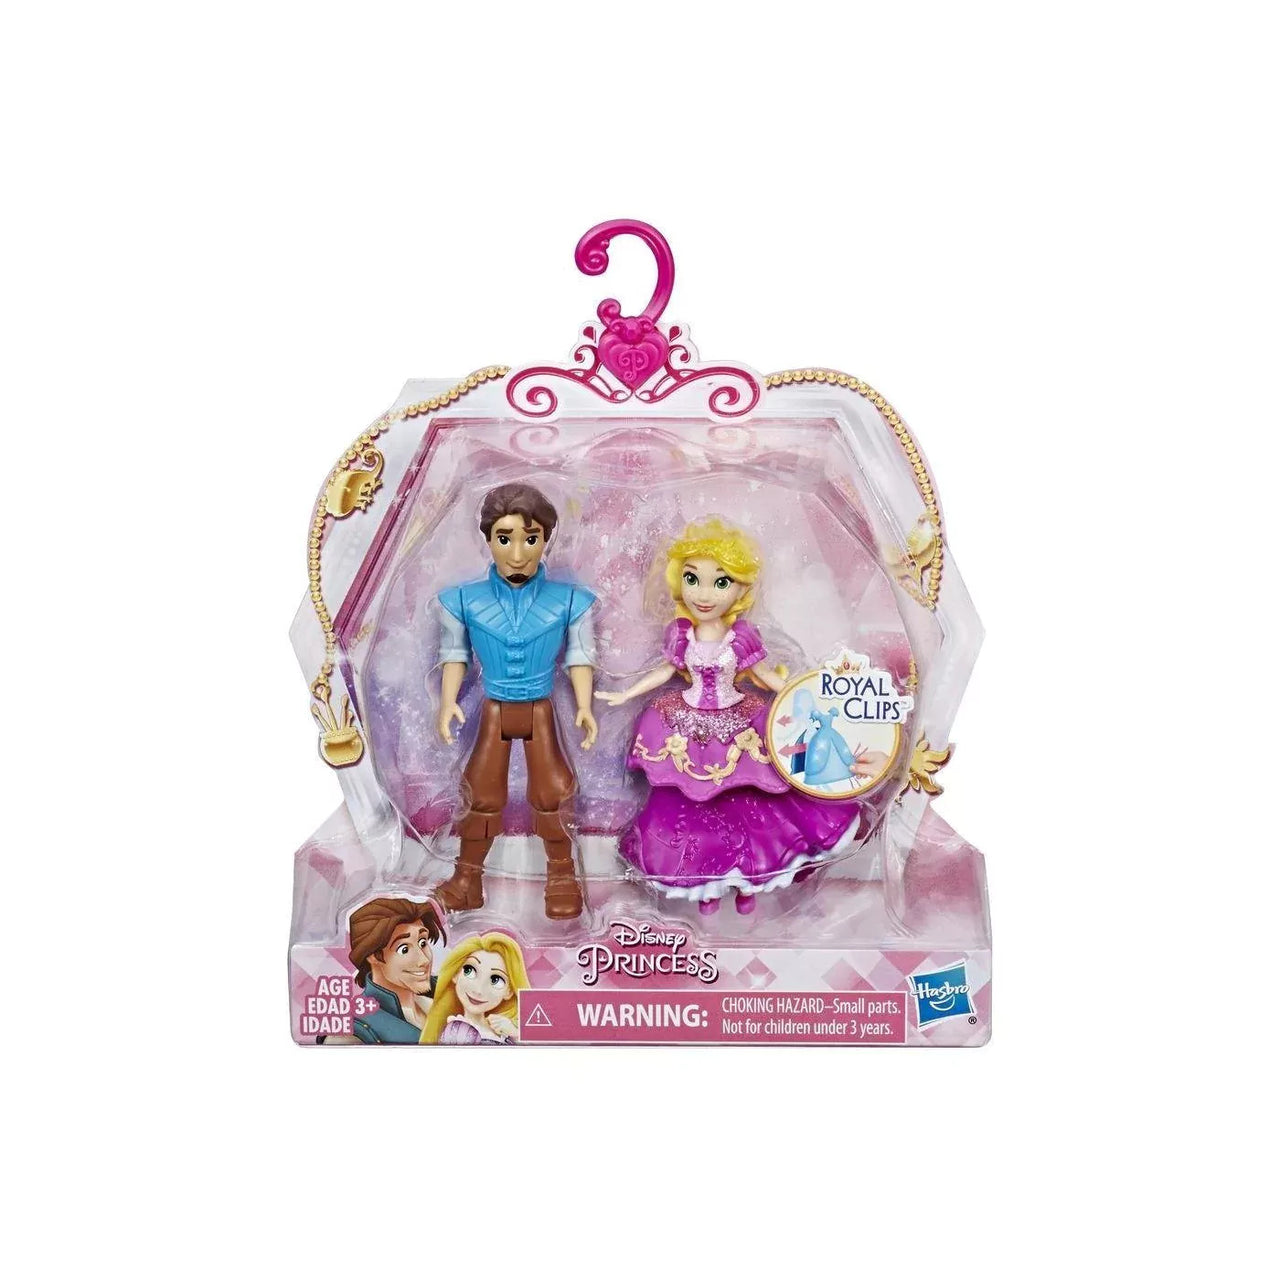 Hasbro-Disney Princess Small Doll Princess and Prince Assortment